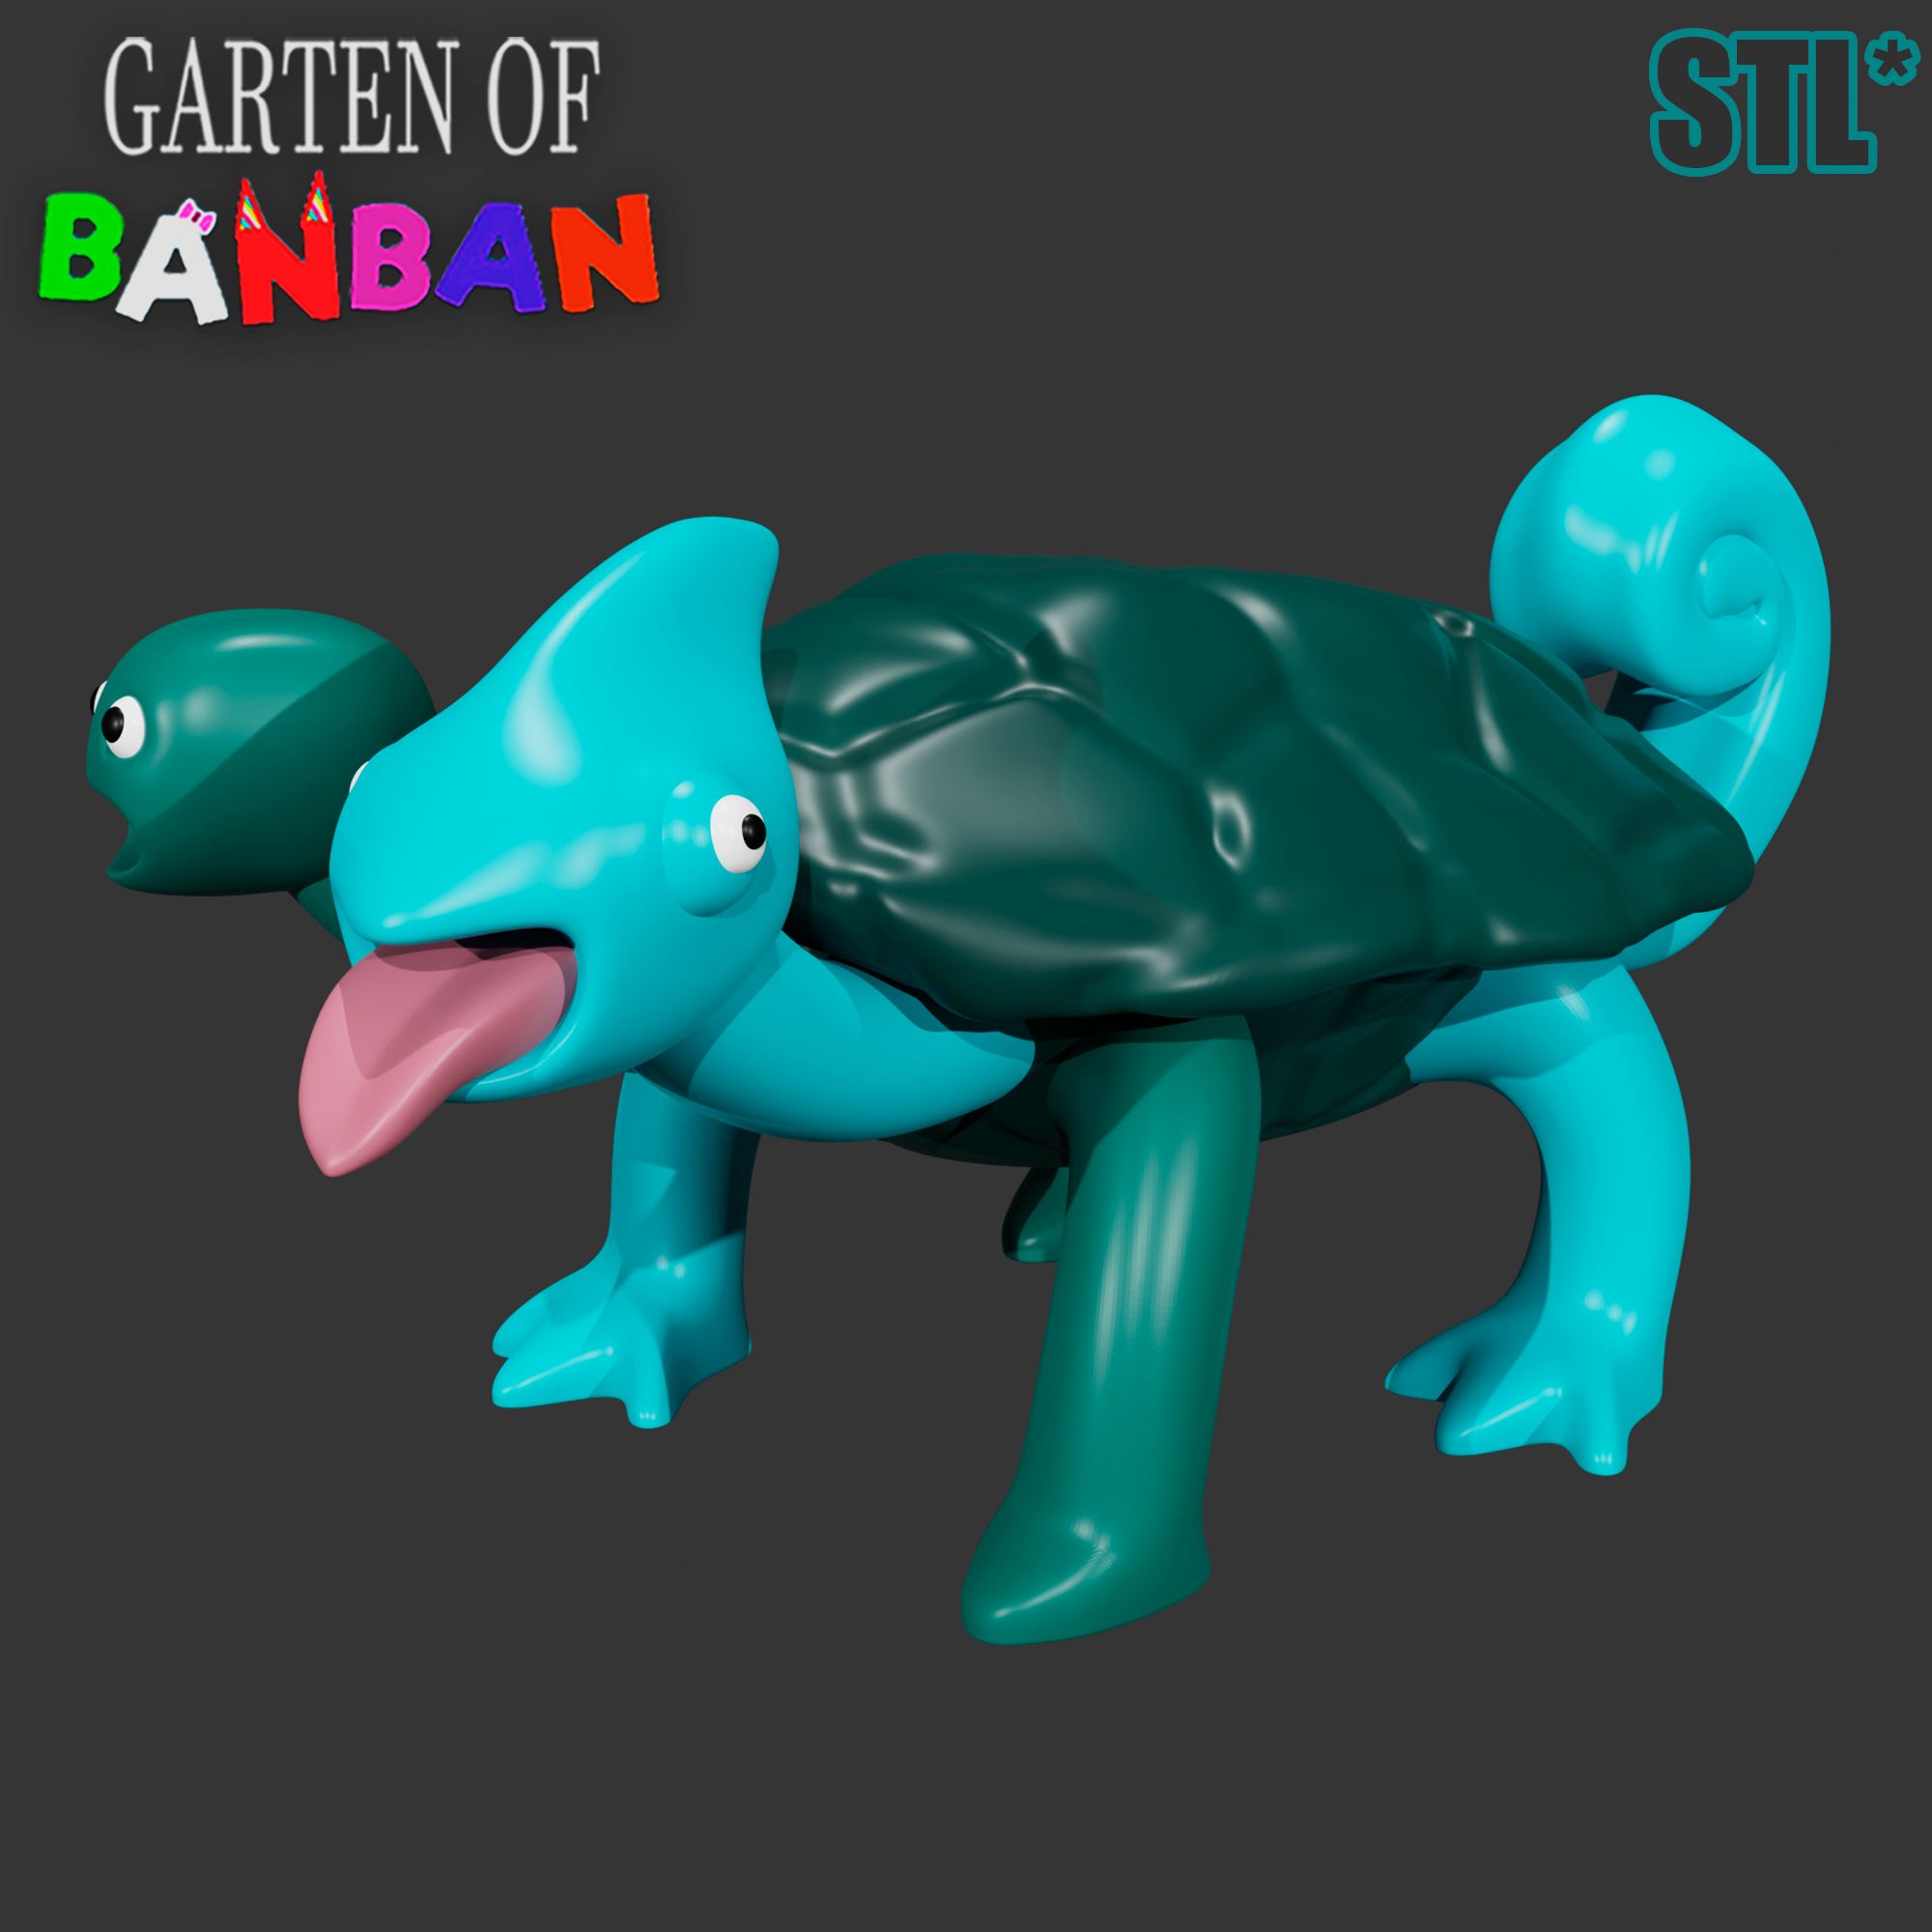 Garten Of BanBan Community Community - Fan art, videos, guides